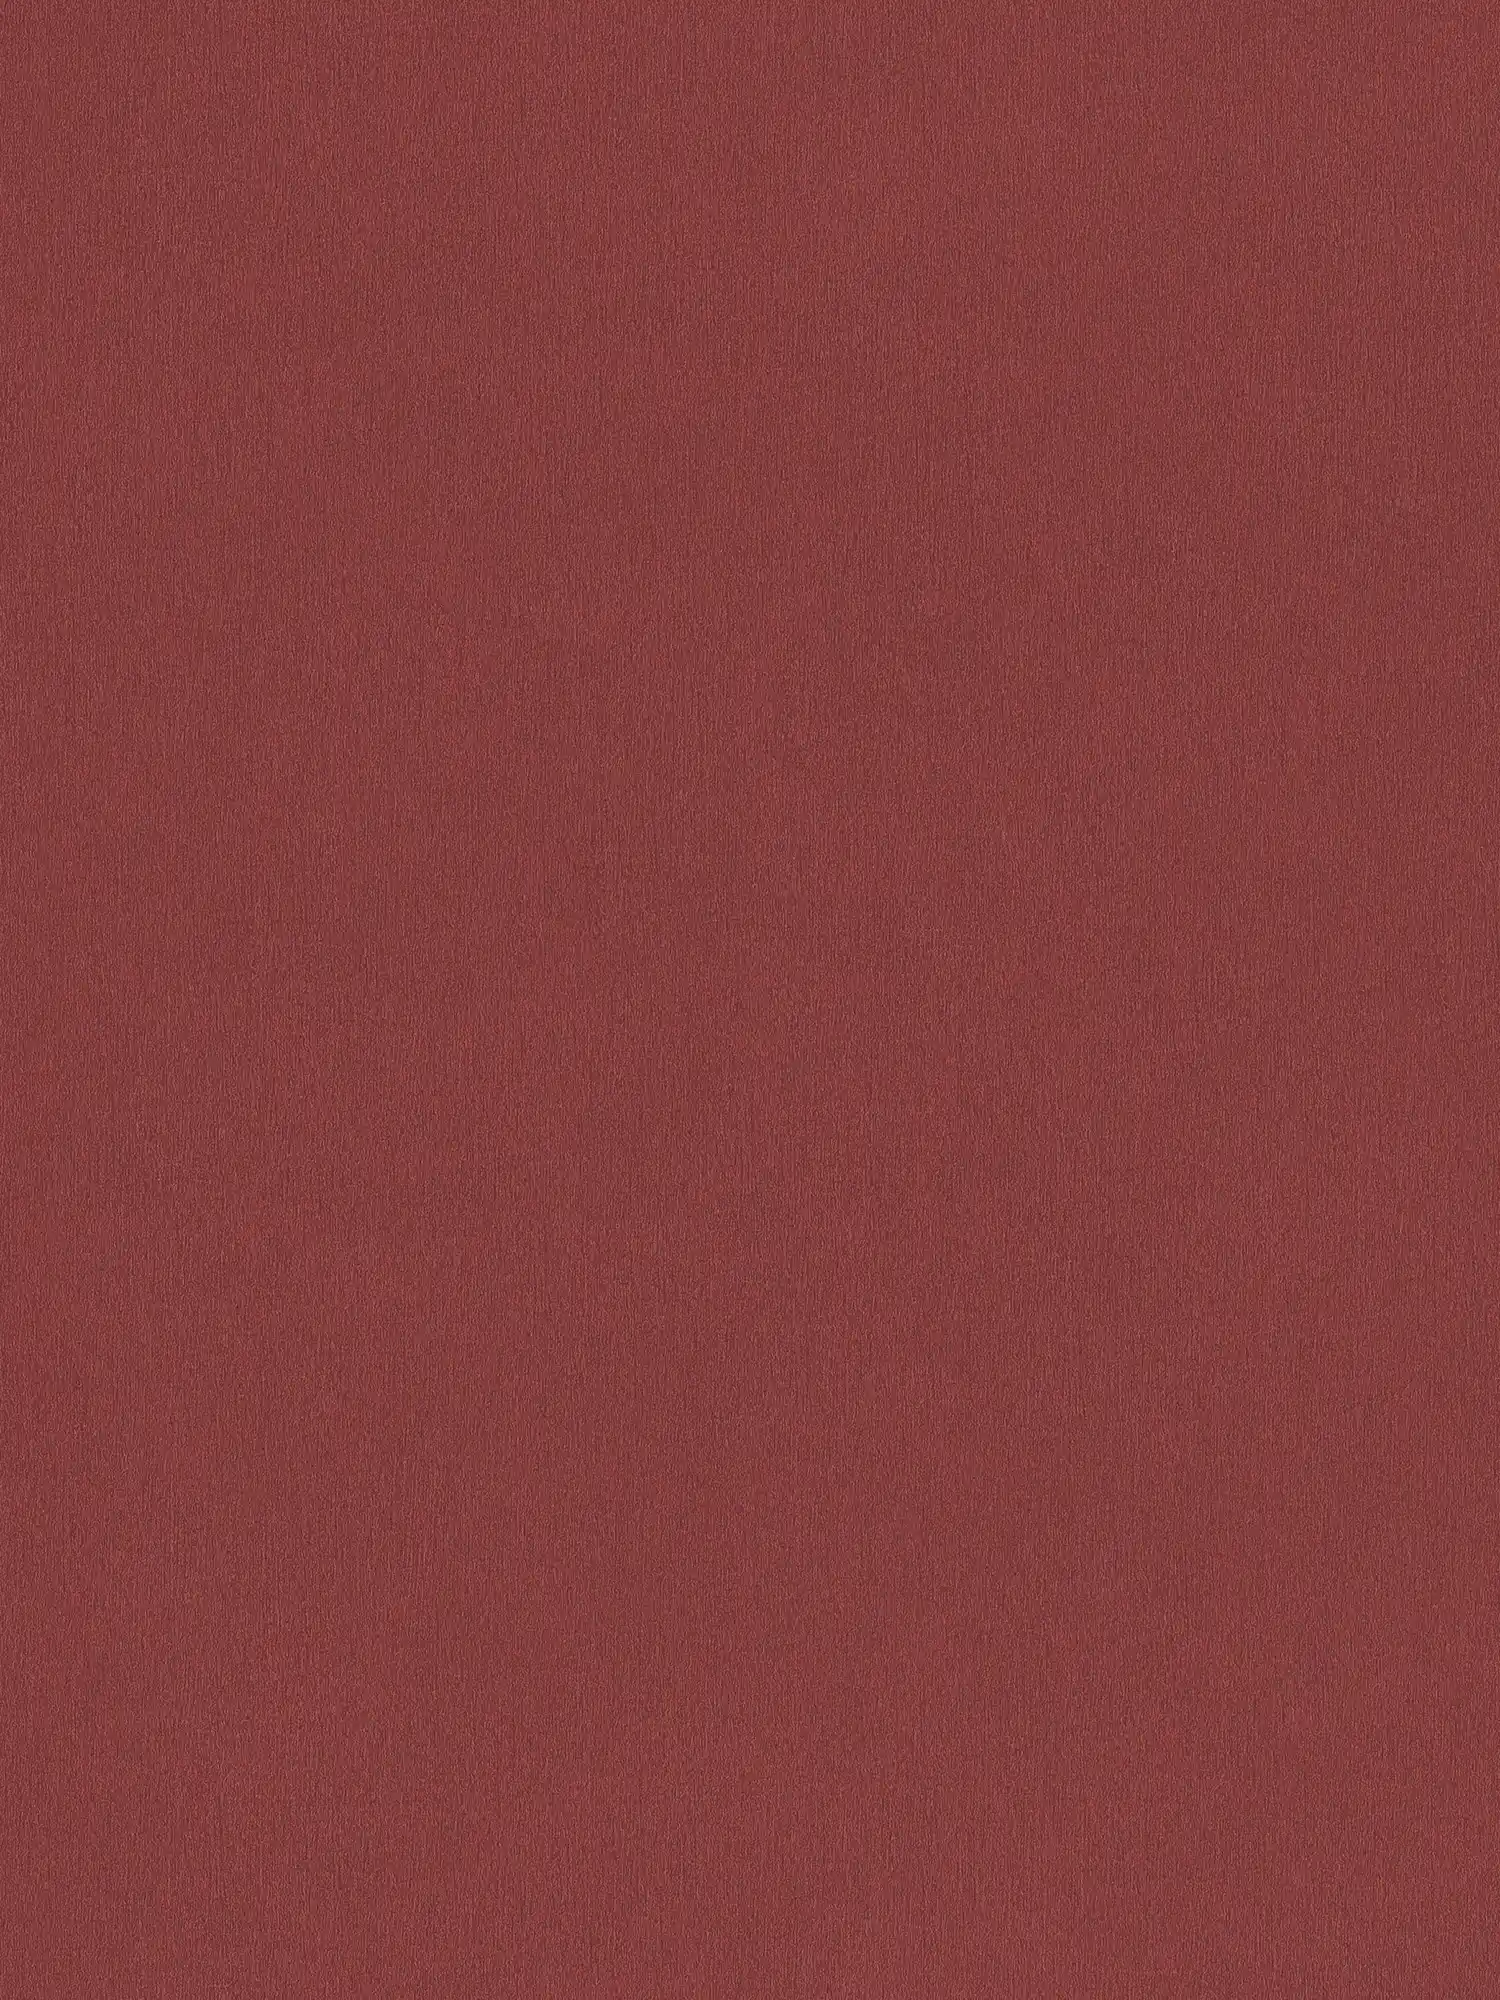 Tapete Bordeaux Rot mit Farbstruktur – Dunkelrot
